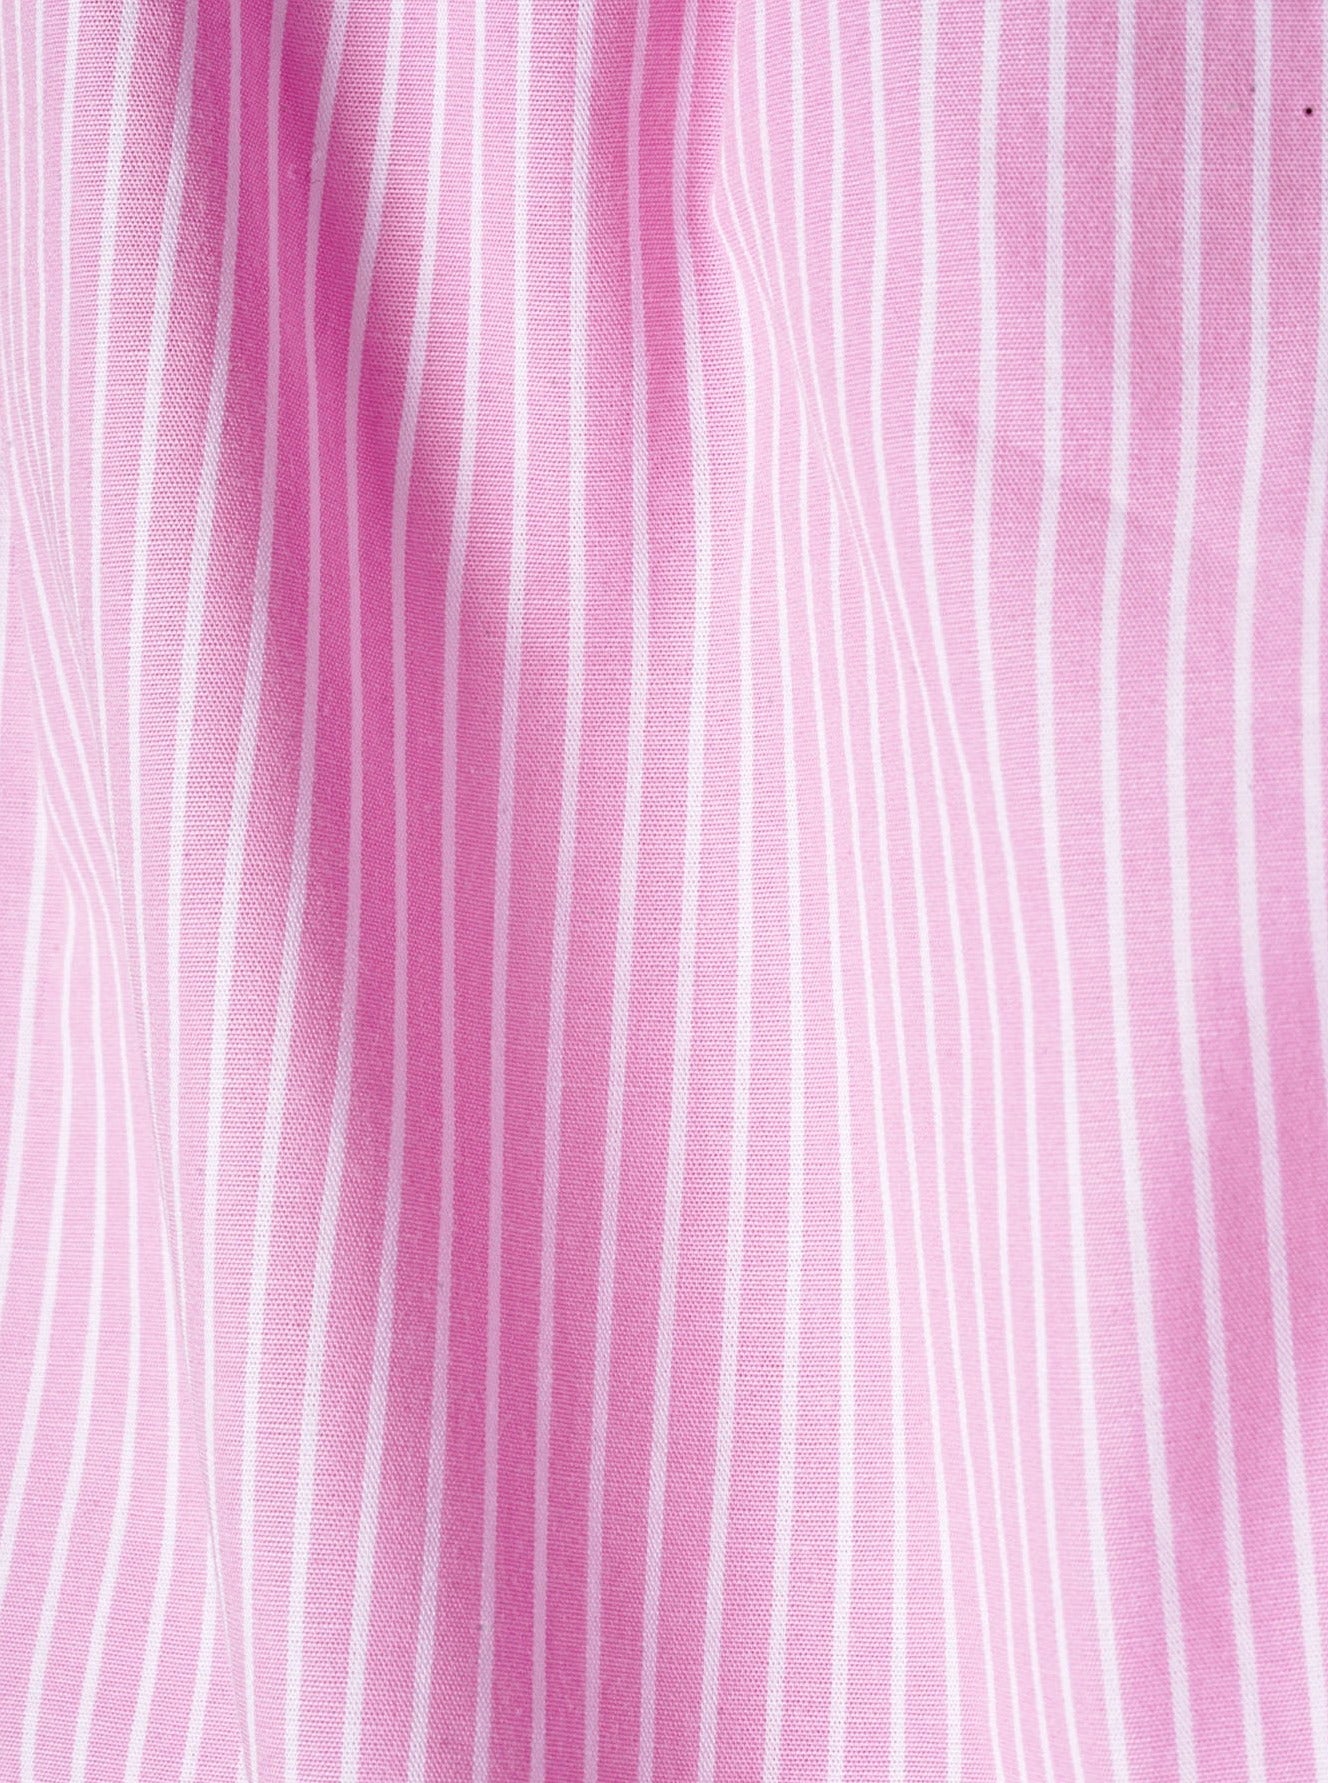 Pyjama Set (Shirt+ Shorts) - pretty pink stripe